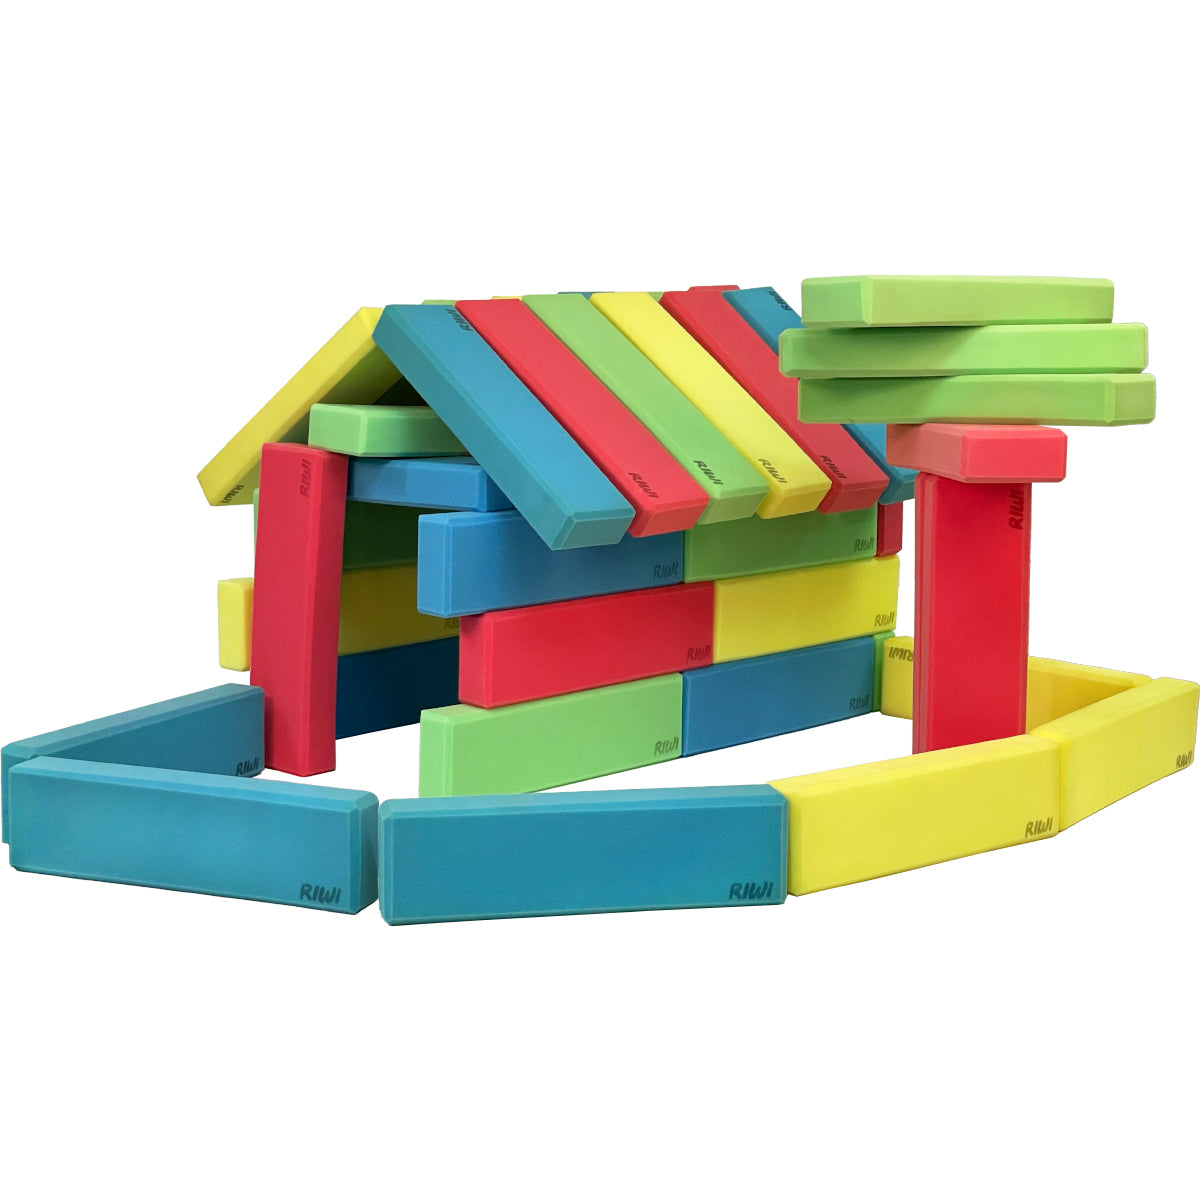 RIWI building blocks kindergarten soft foam blocks xxl